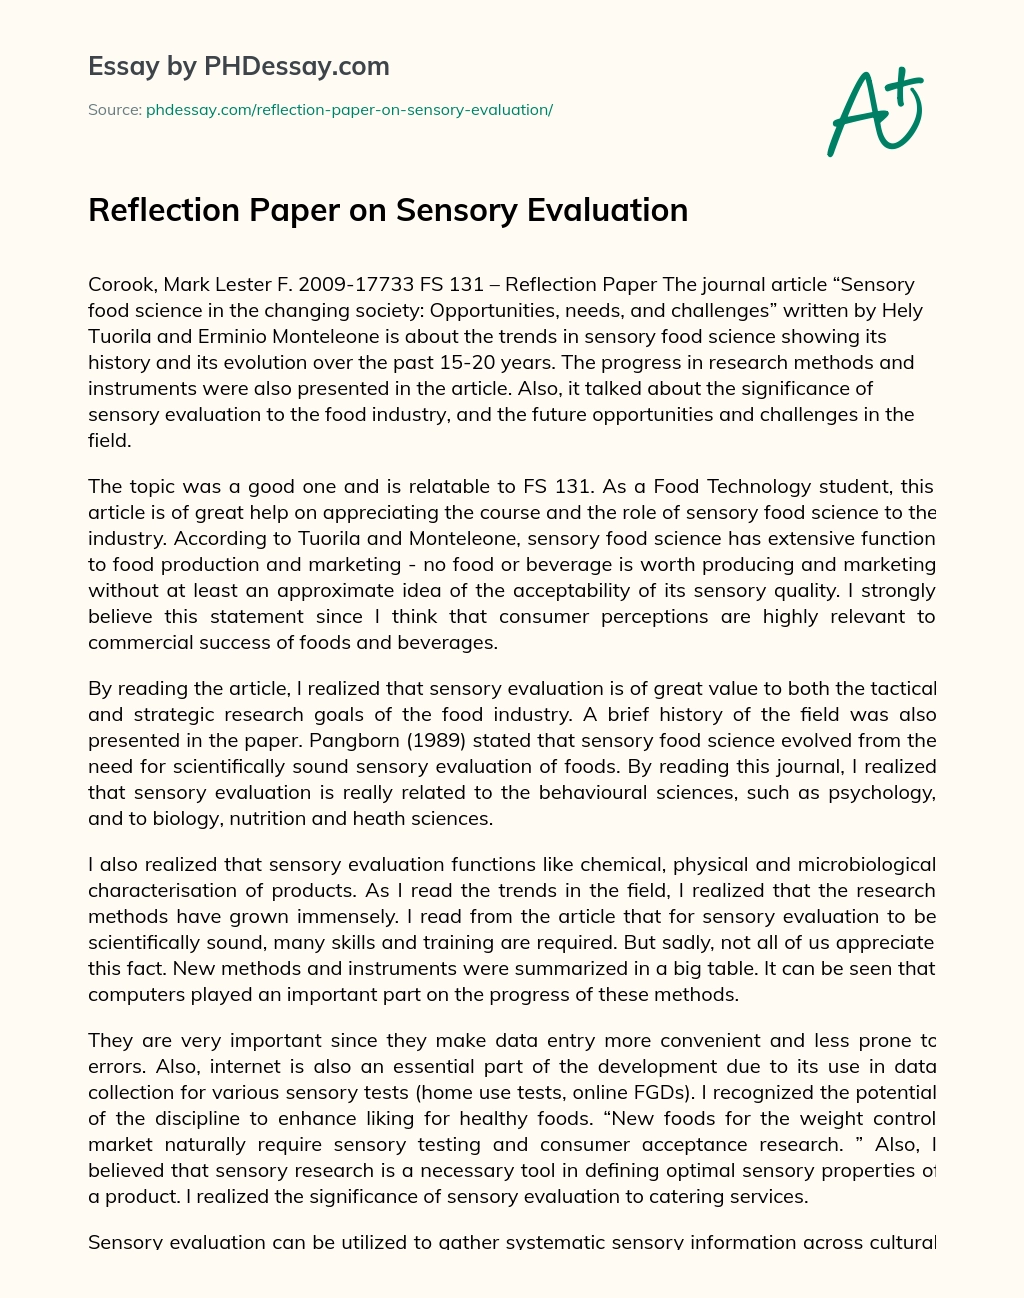 Reflection Paper on Sensory Evaluation